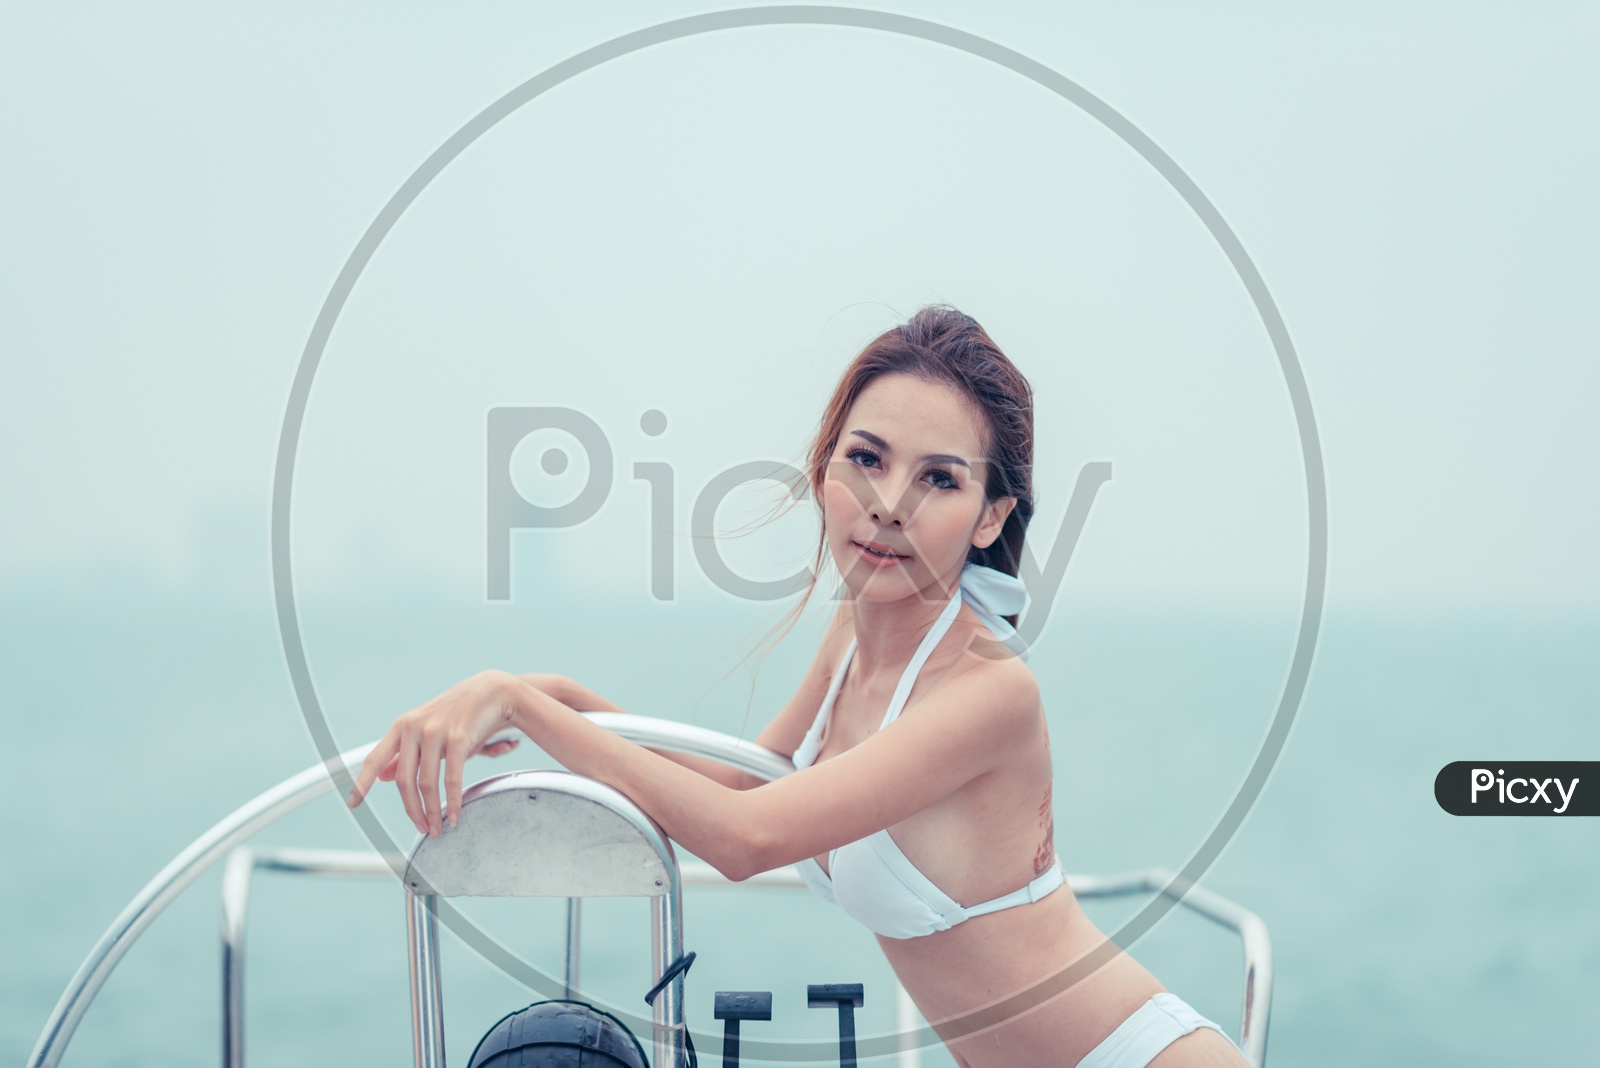 Asian sexy girl with dark hair in luxurious white bikini posing on a Yacht